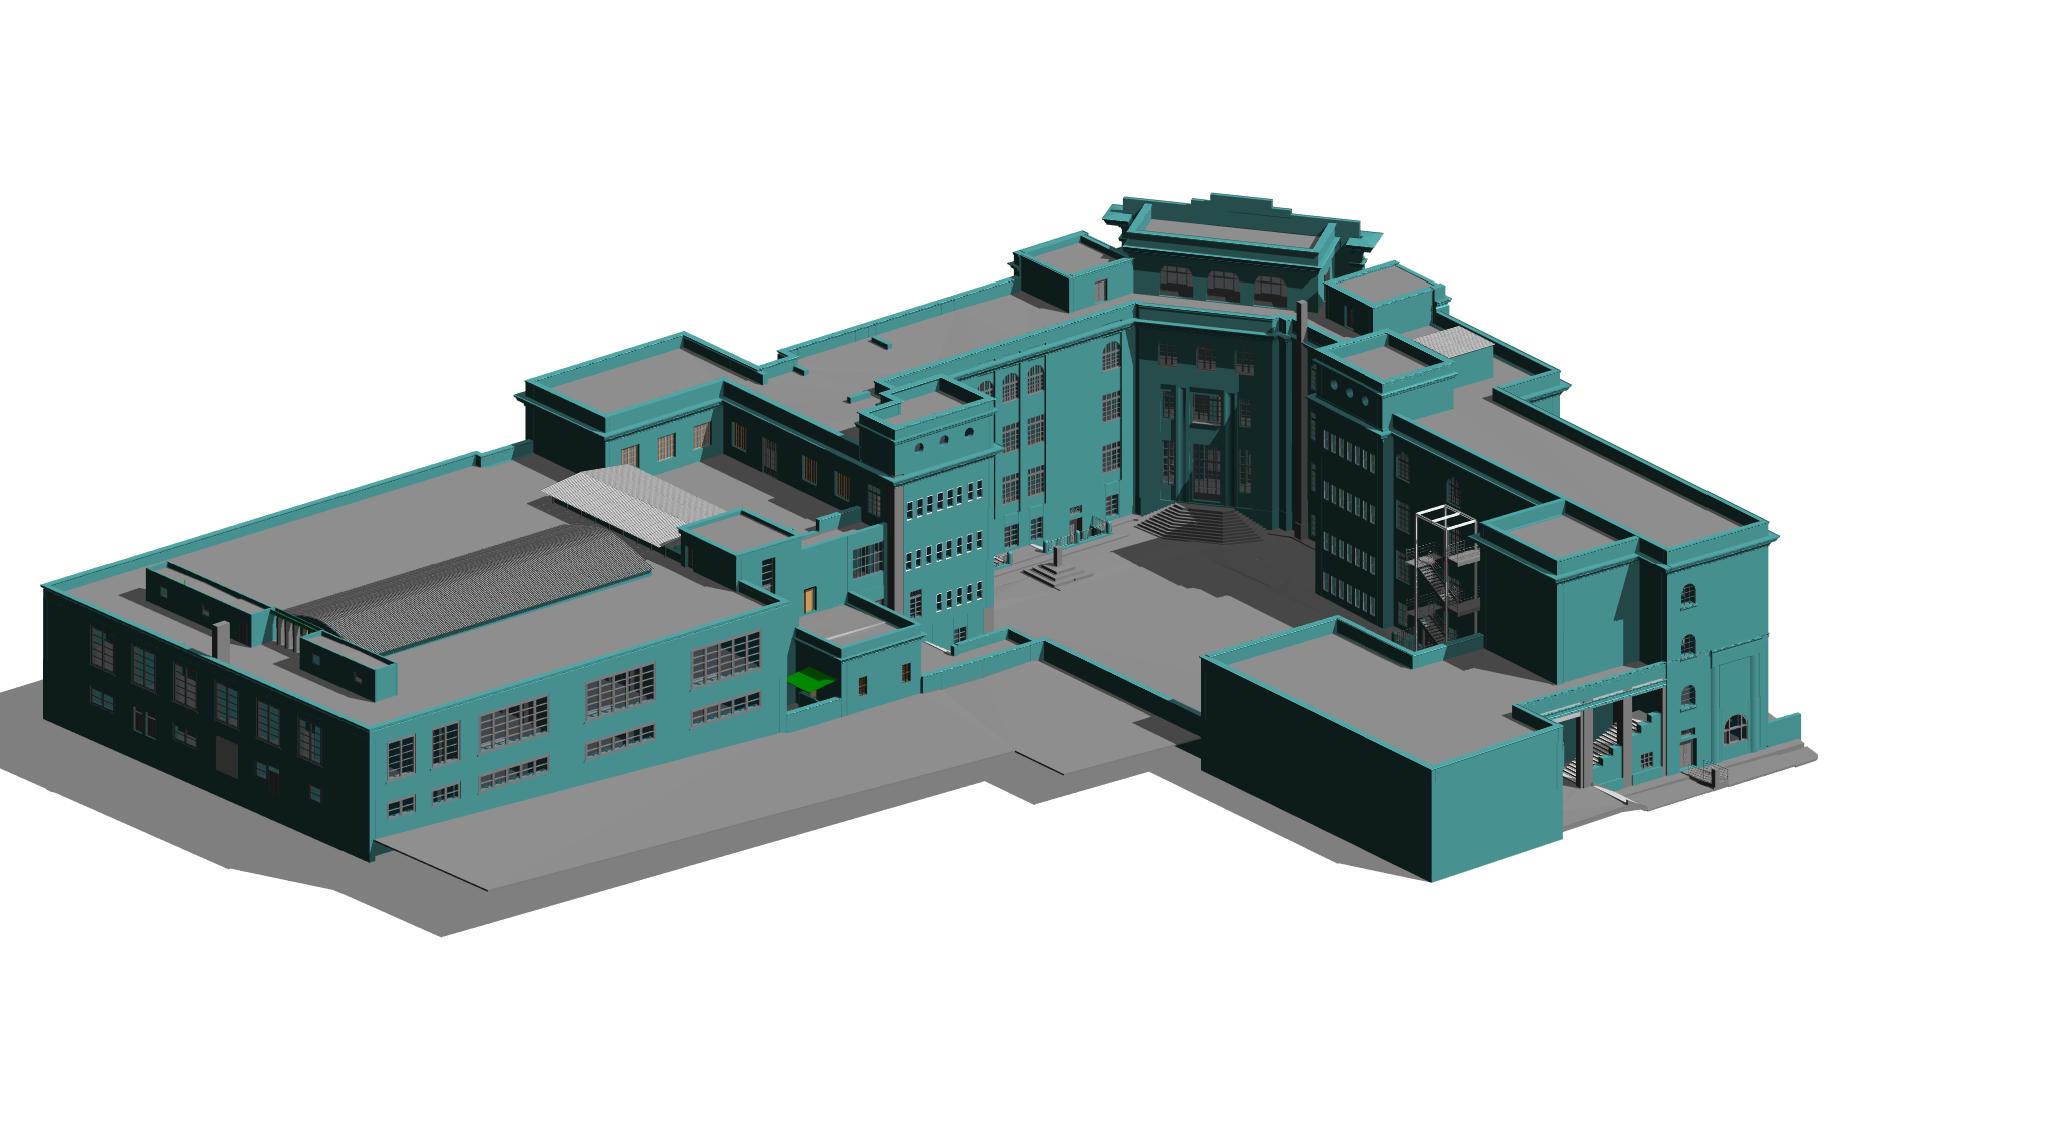 Revit BIM Modelling from Scan for a School Building, UK